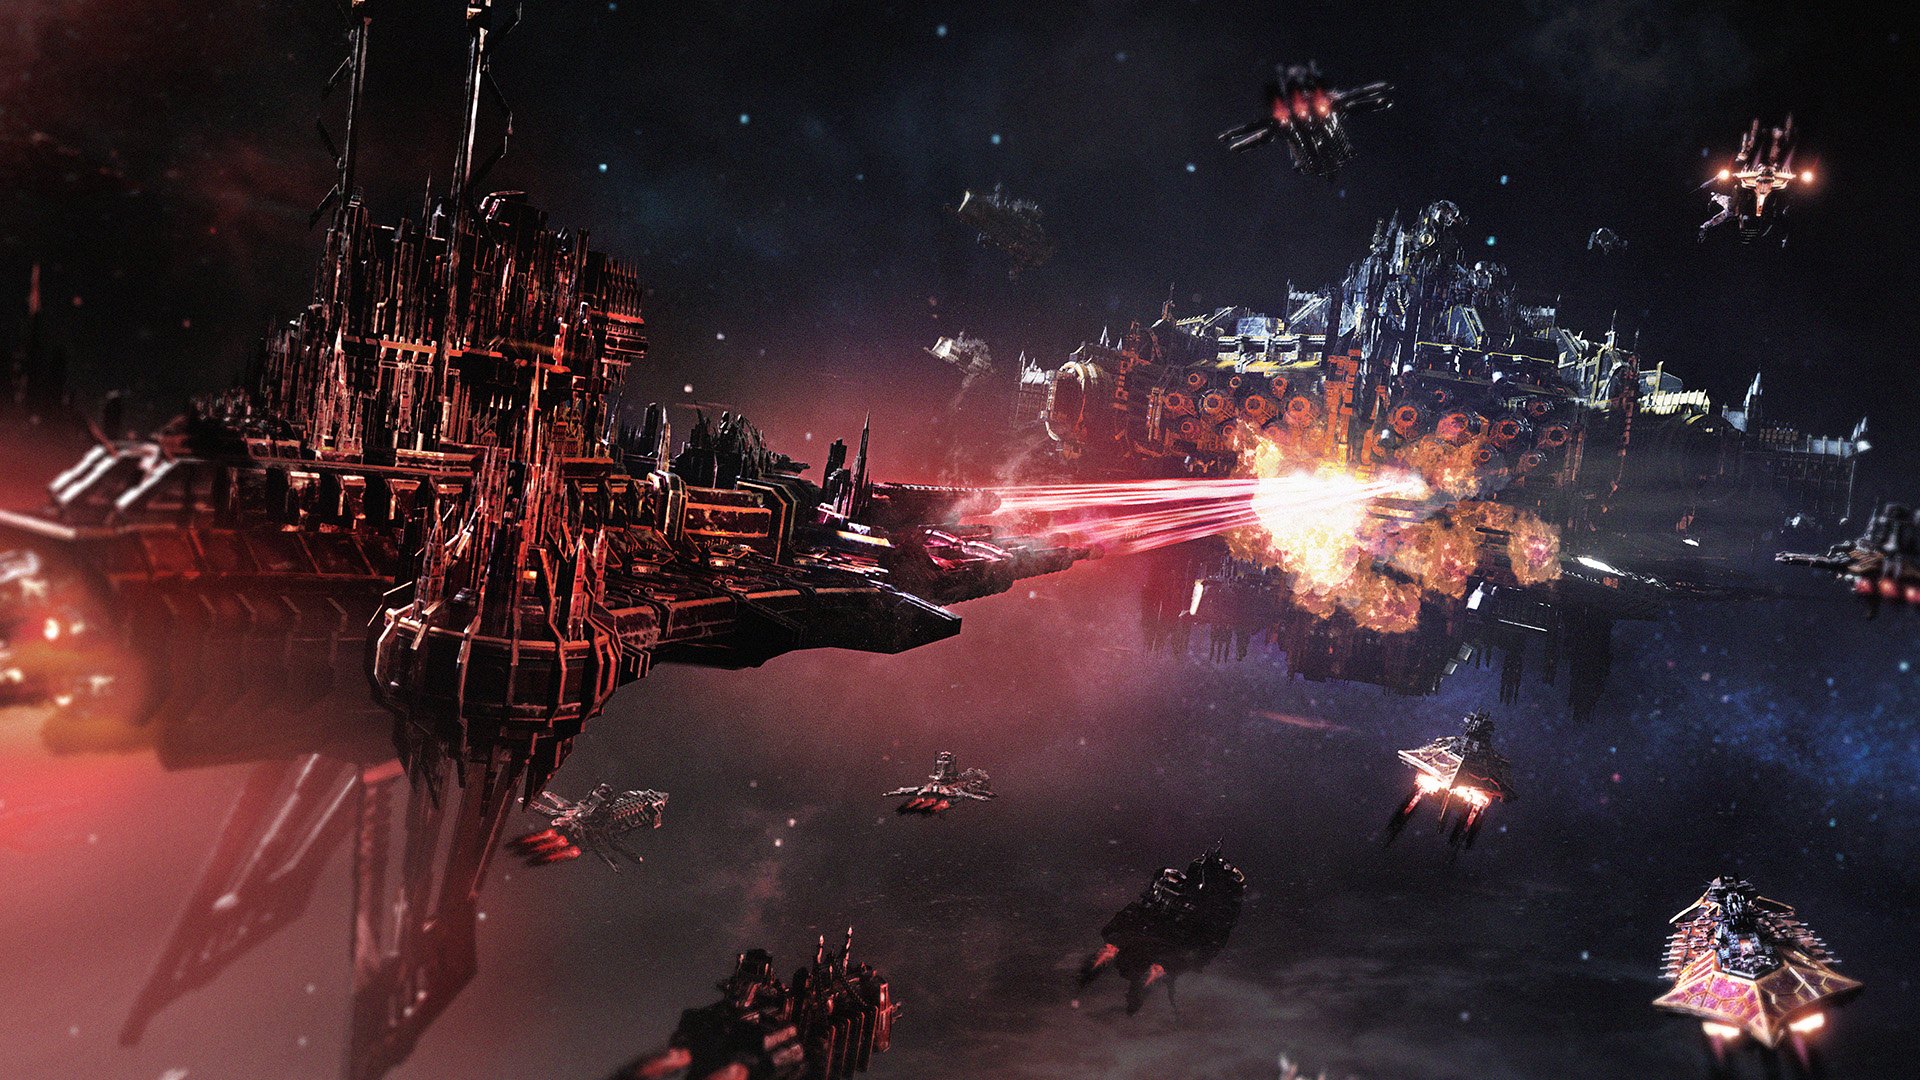 Battlefleet Gothic: Armada 2 - Chaos Campaign Expansion EU V2 Steam Altergift